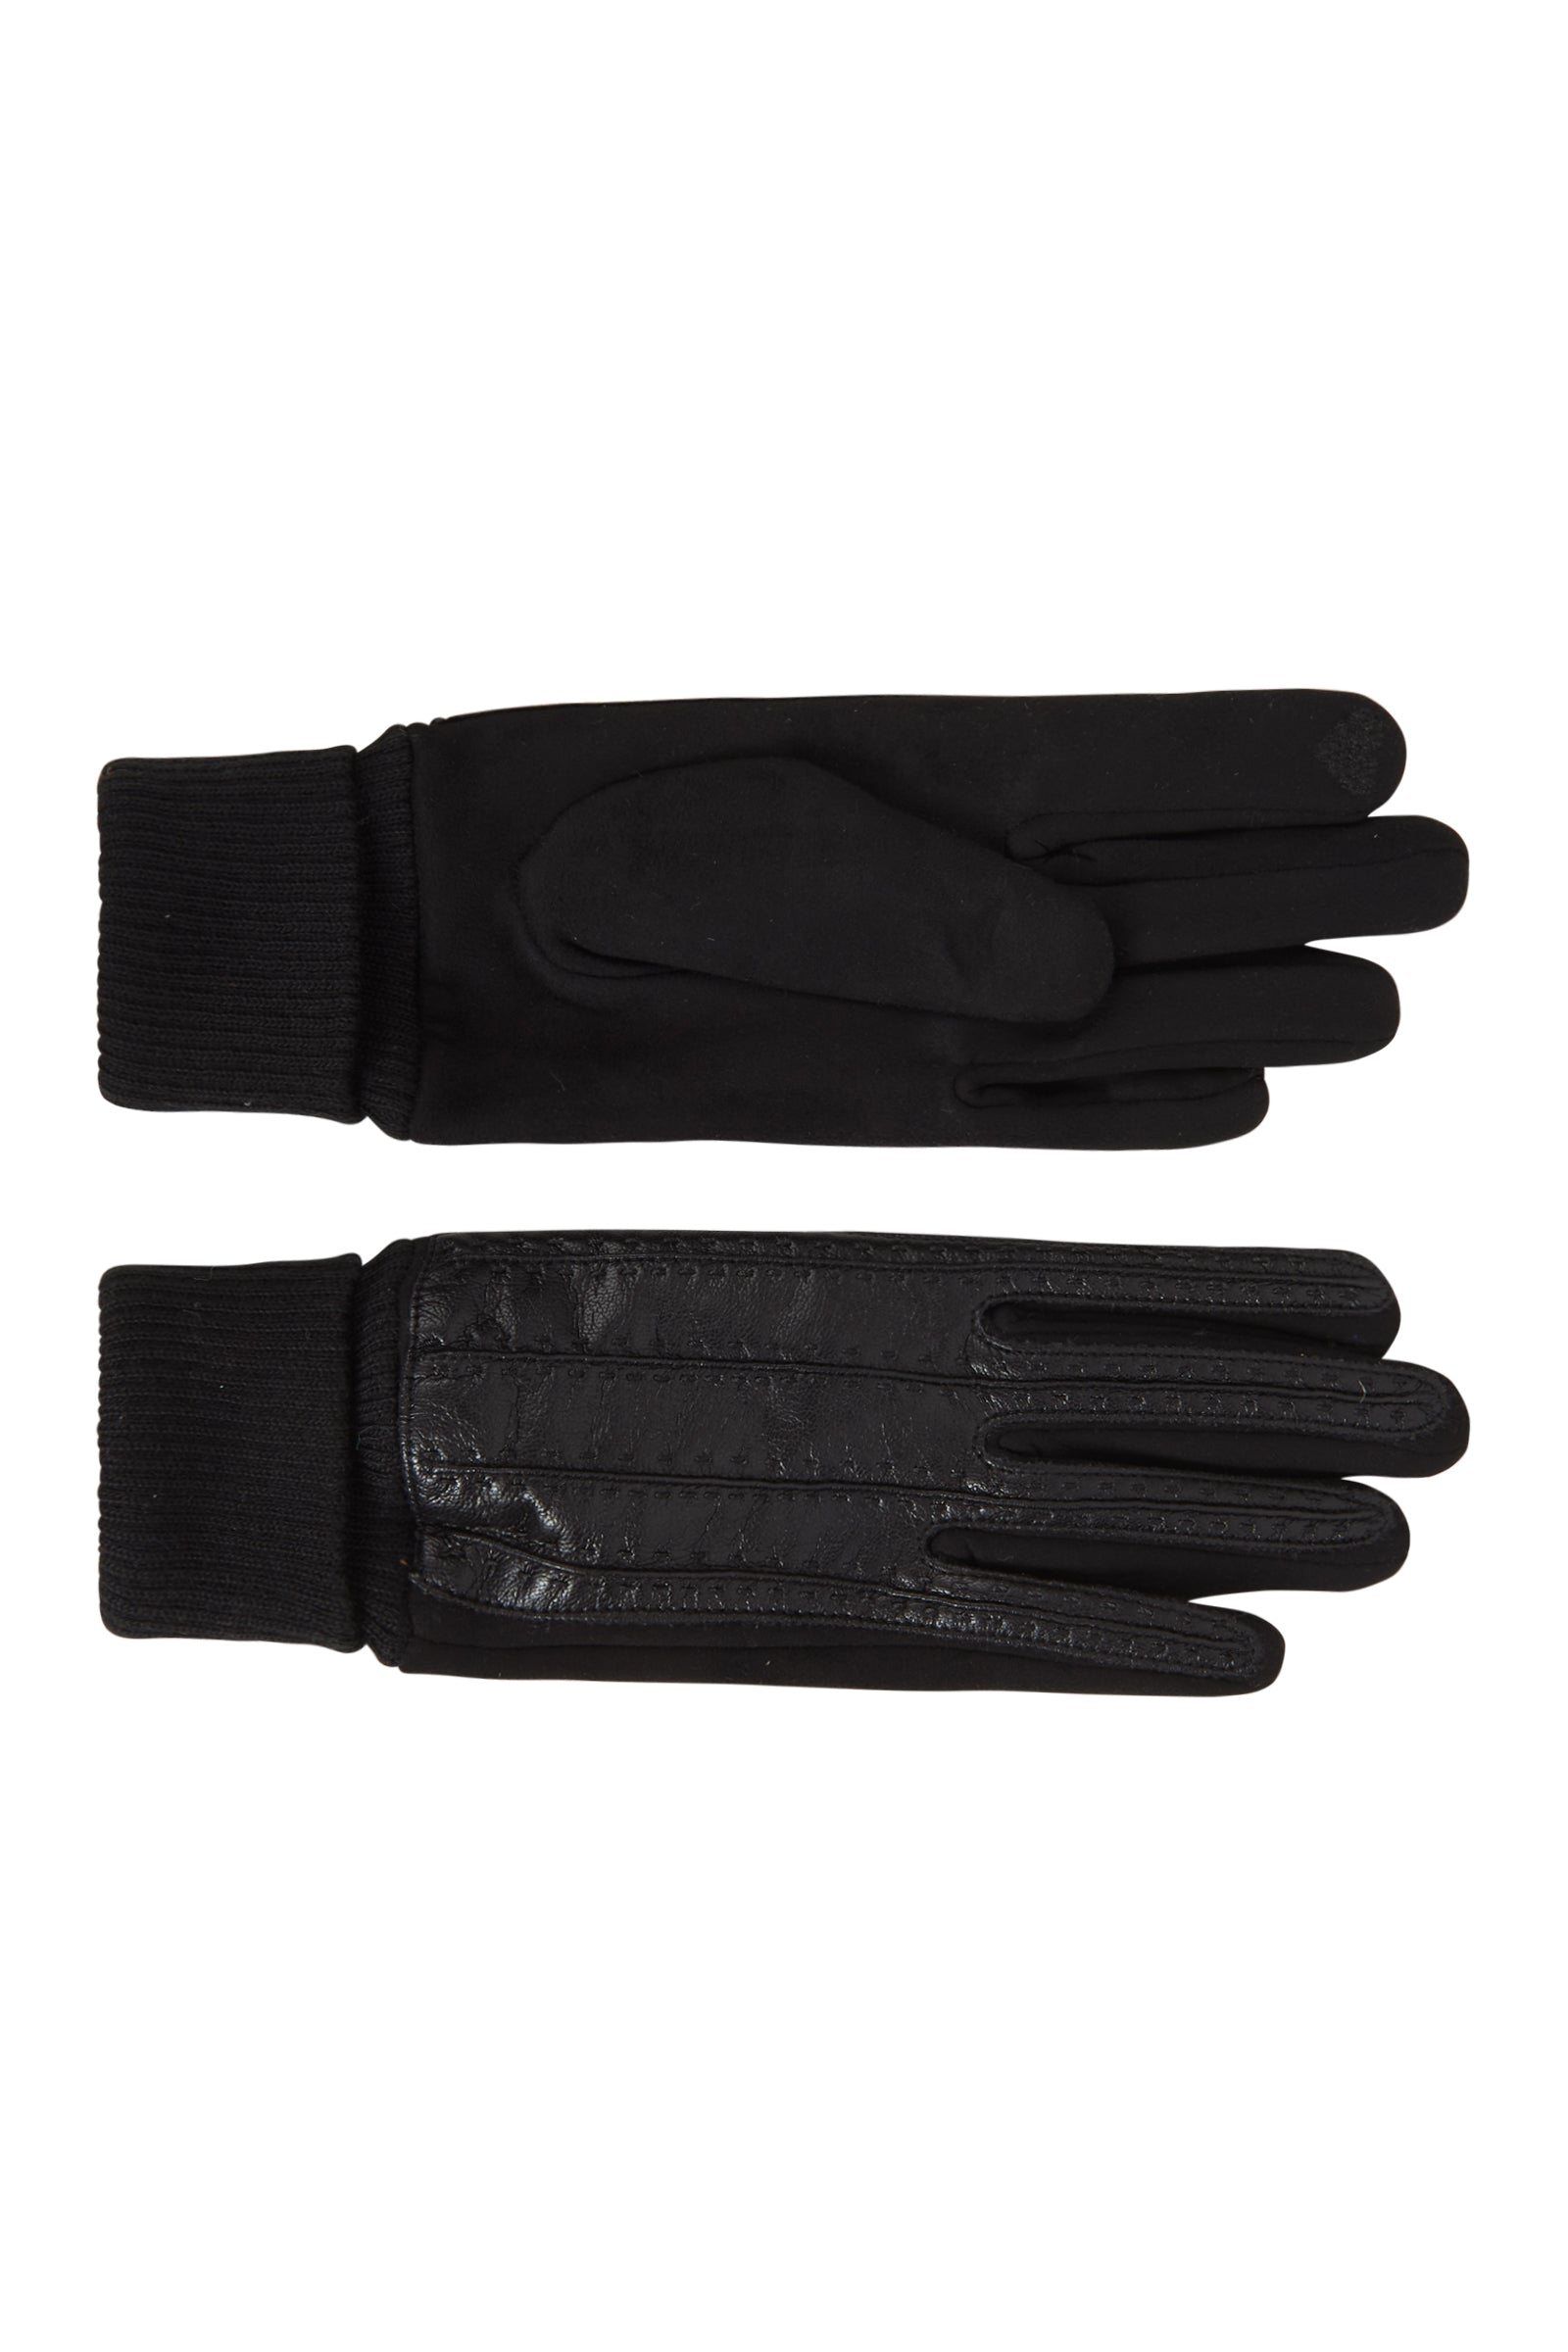 Pilbara Glove - Graphite - eb&ive Glove